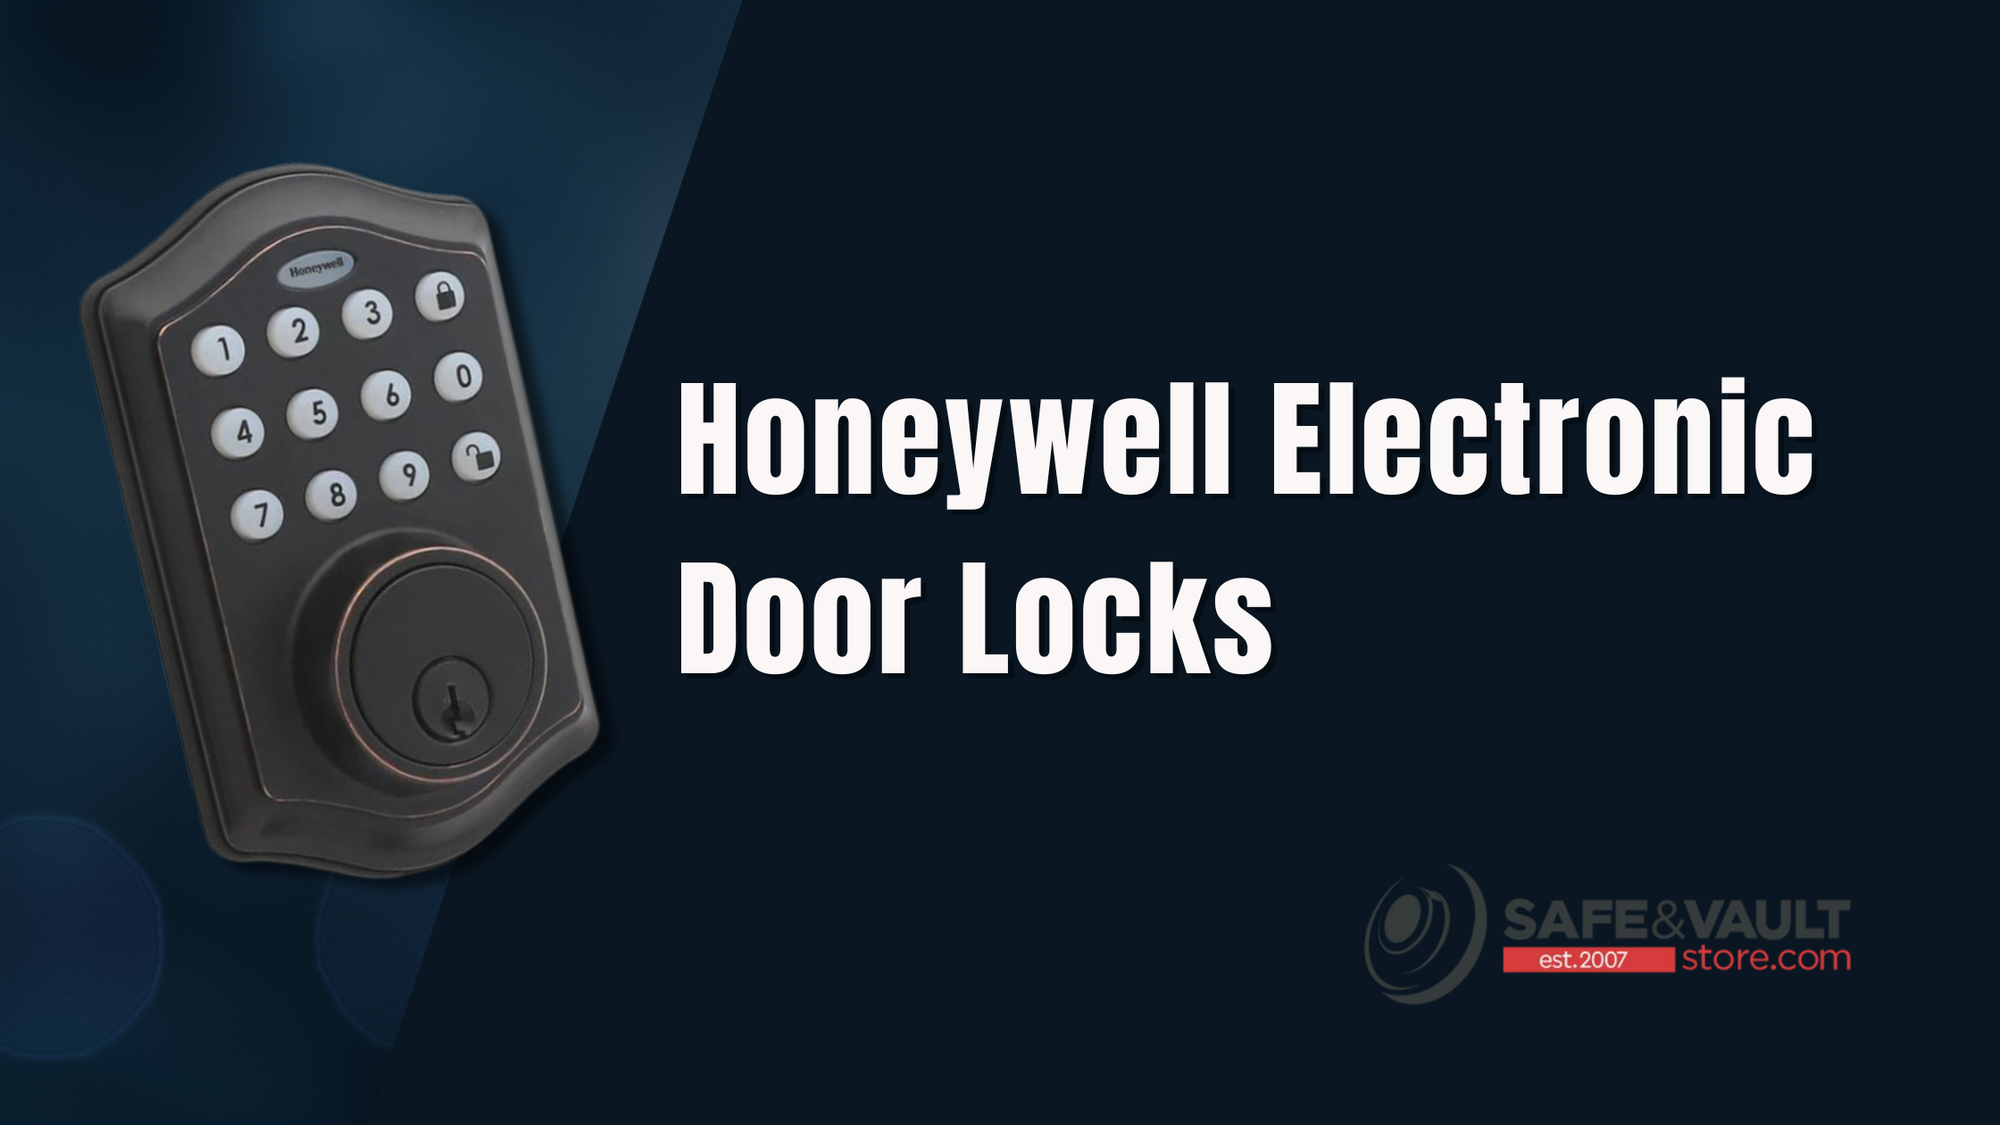 Protect Your Home: Honeywell Electronic Door Locks